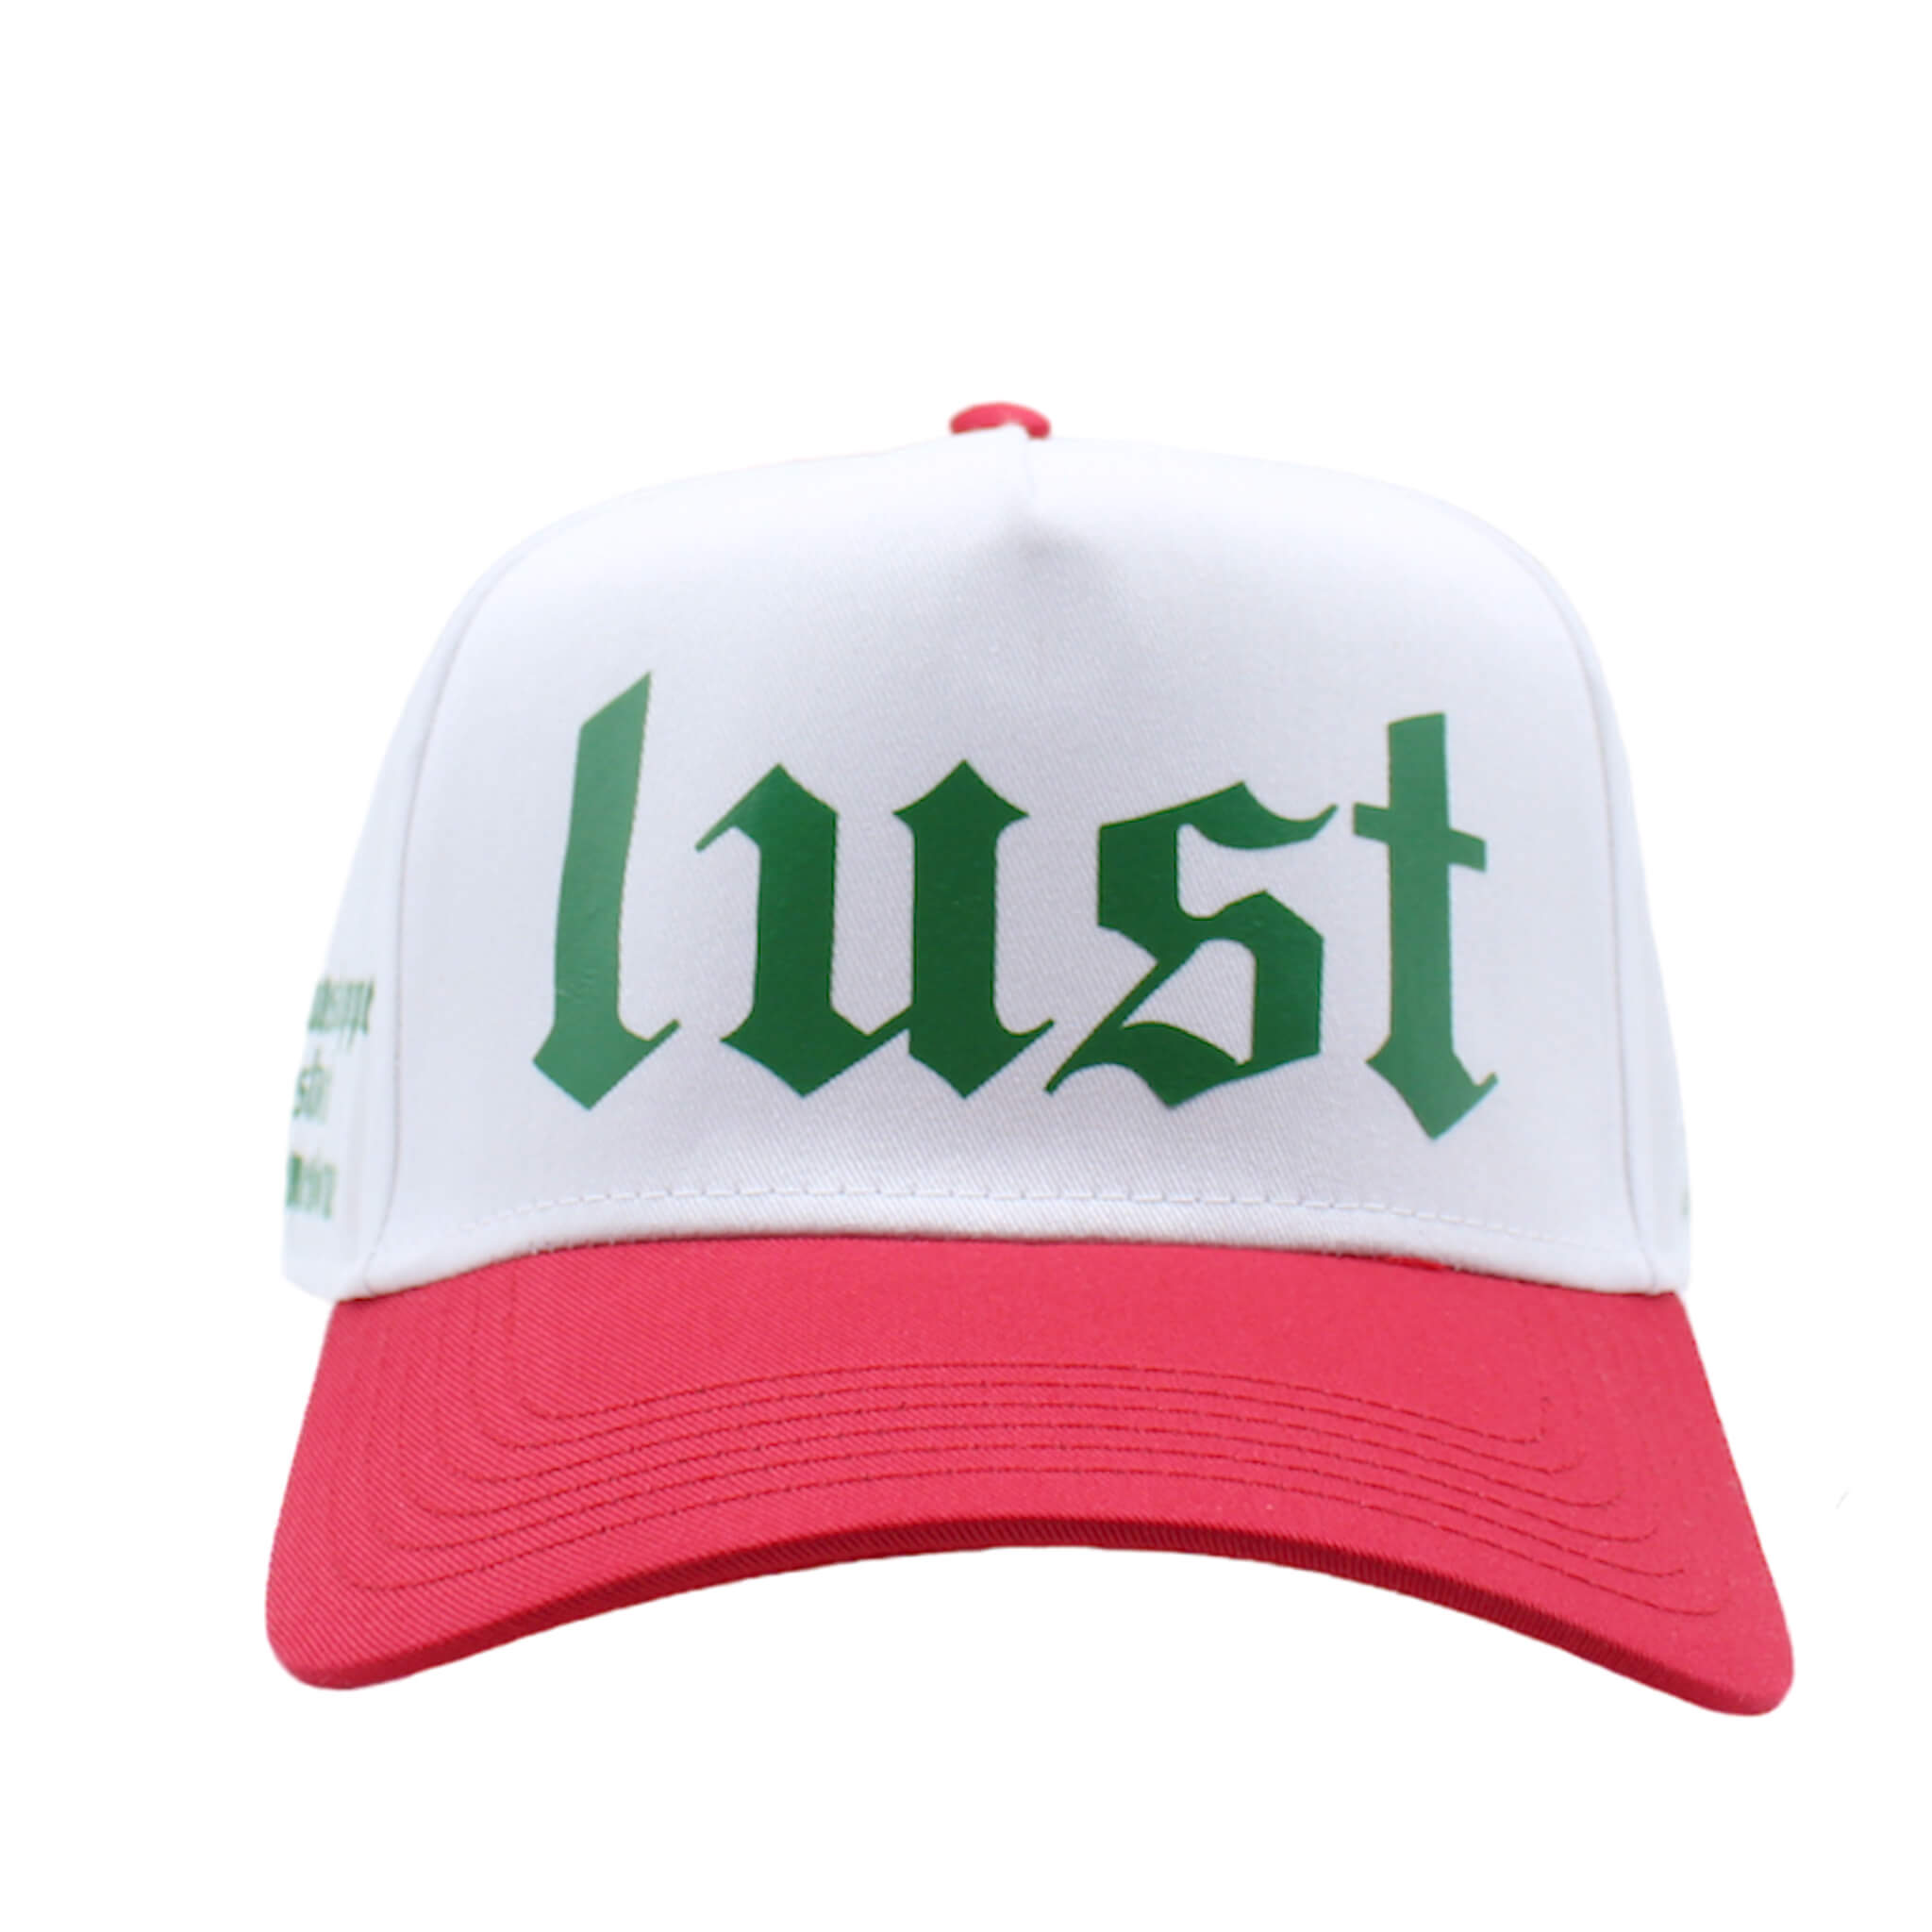 Men's Trucker Hat (Wht/Red/Green)